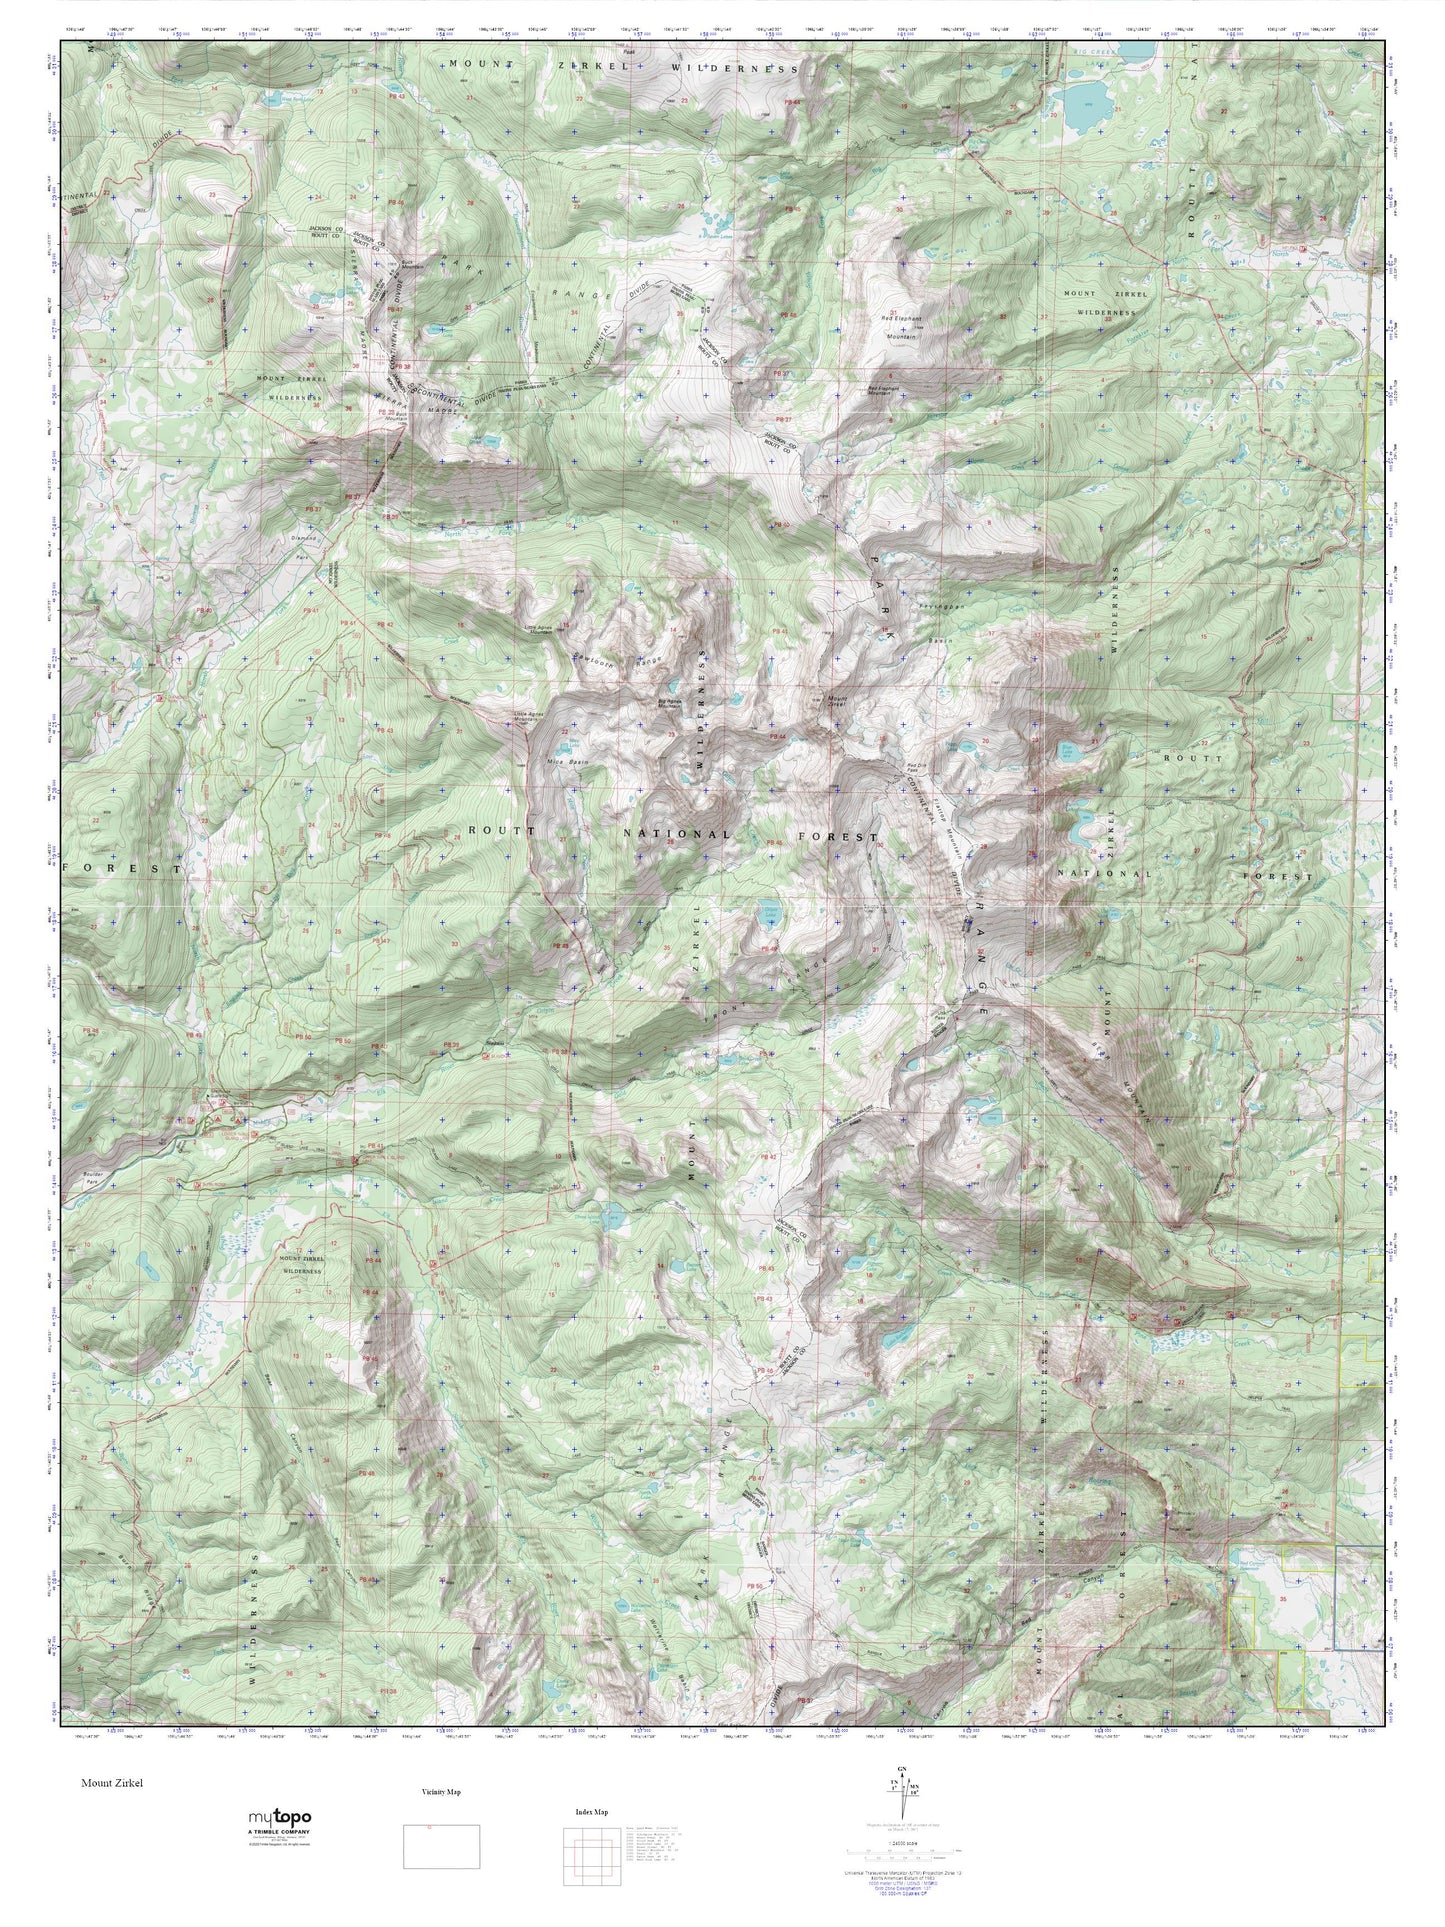 Mount Zirkel MyTopo Explorer Series Map Image